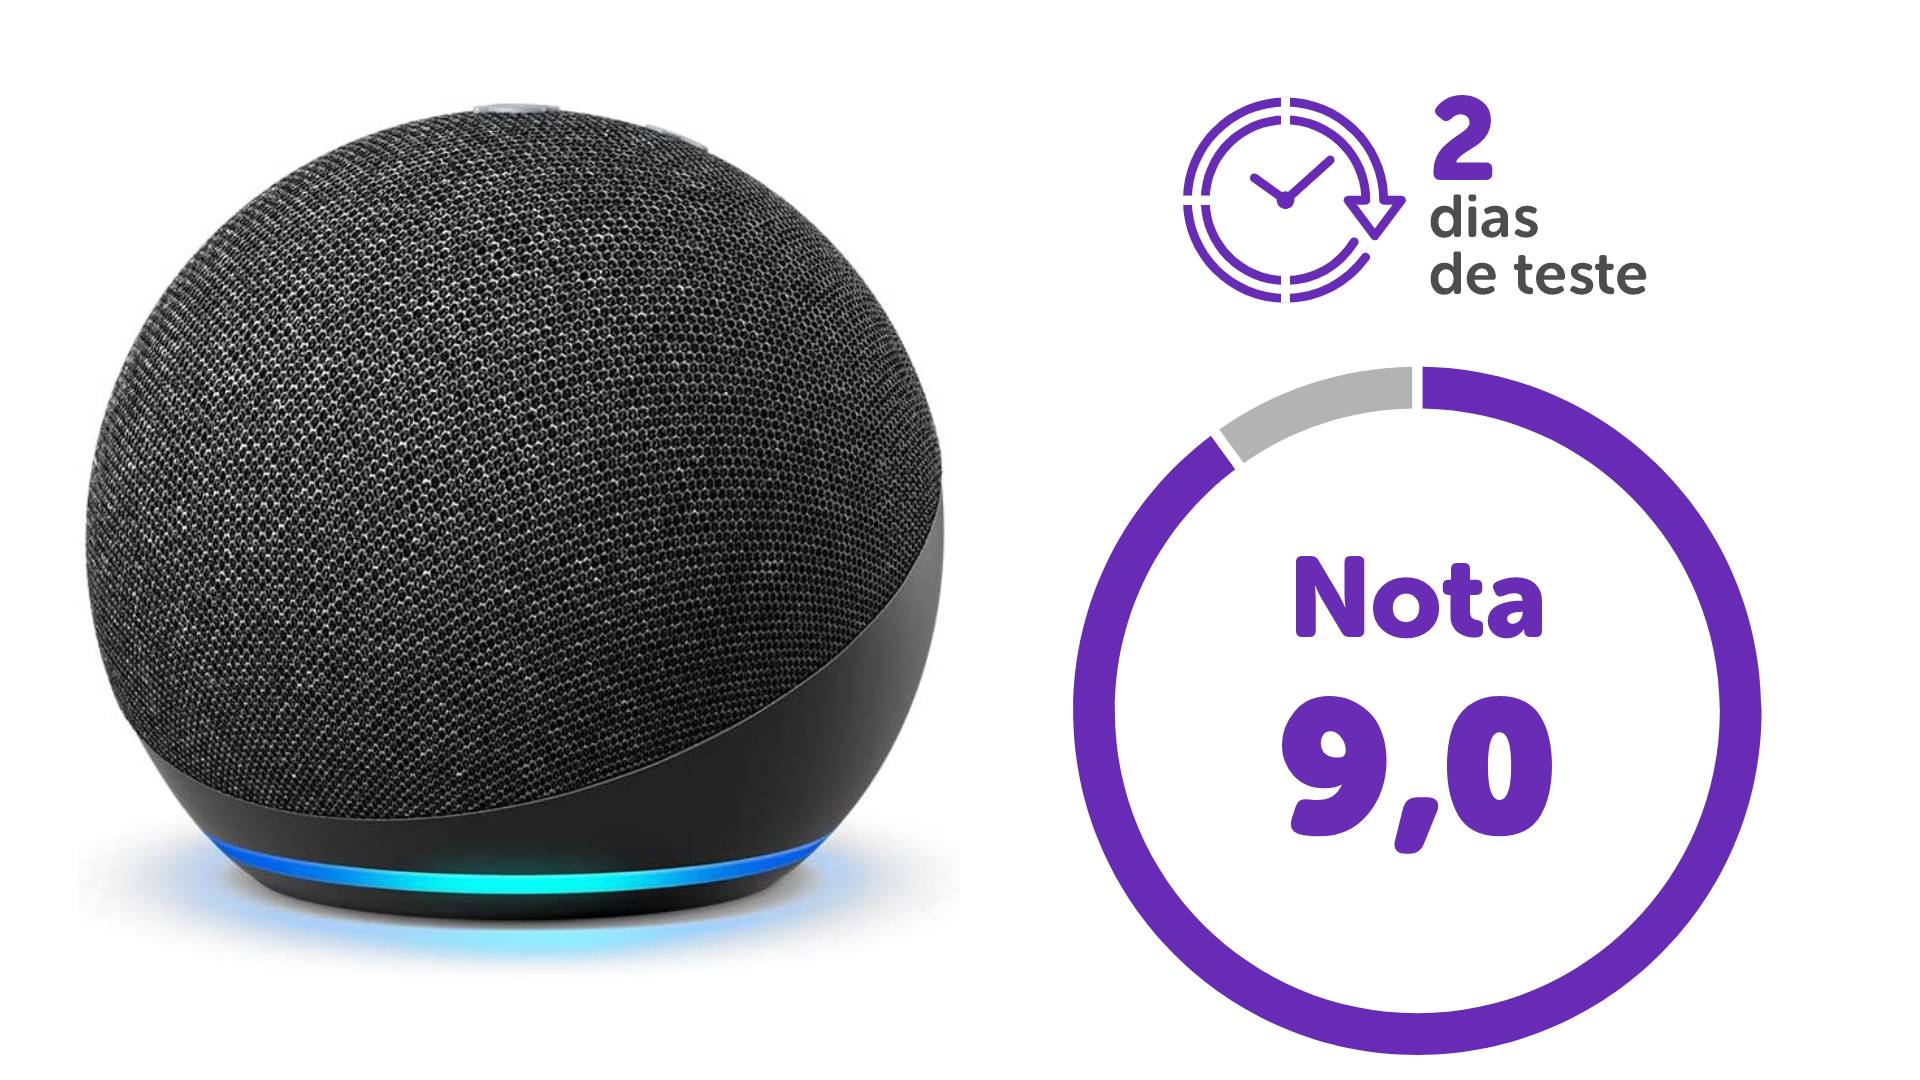 Echo Dot 4: testamos esse smart speaker da